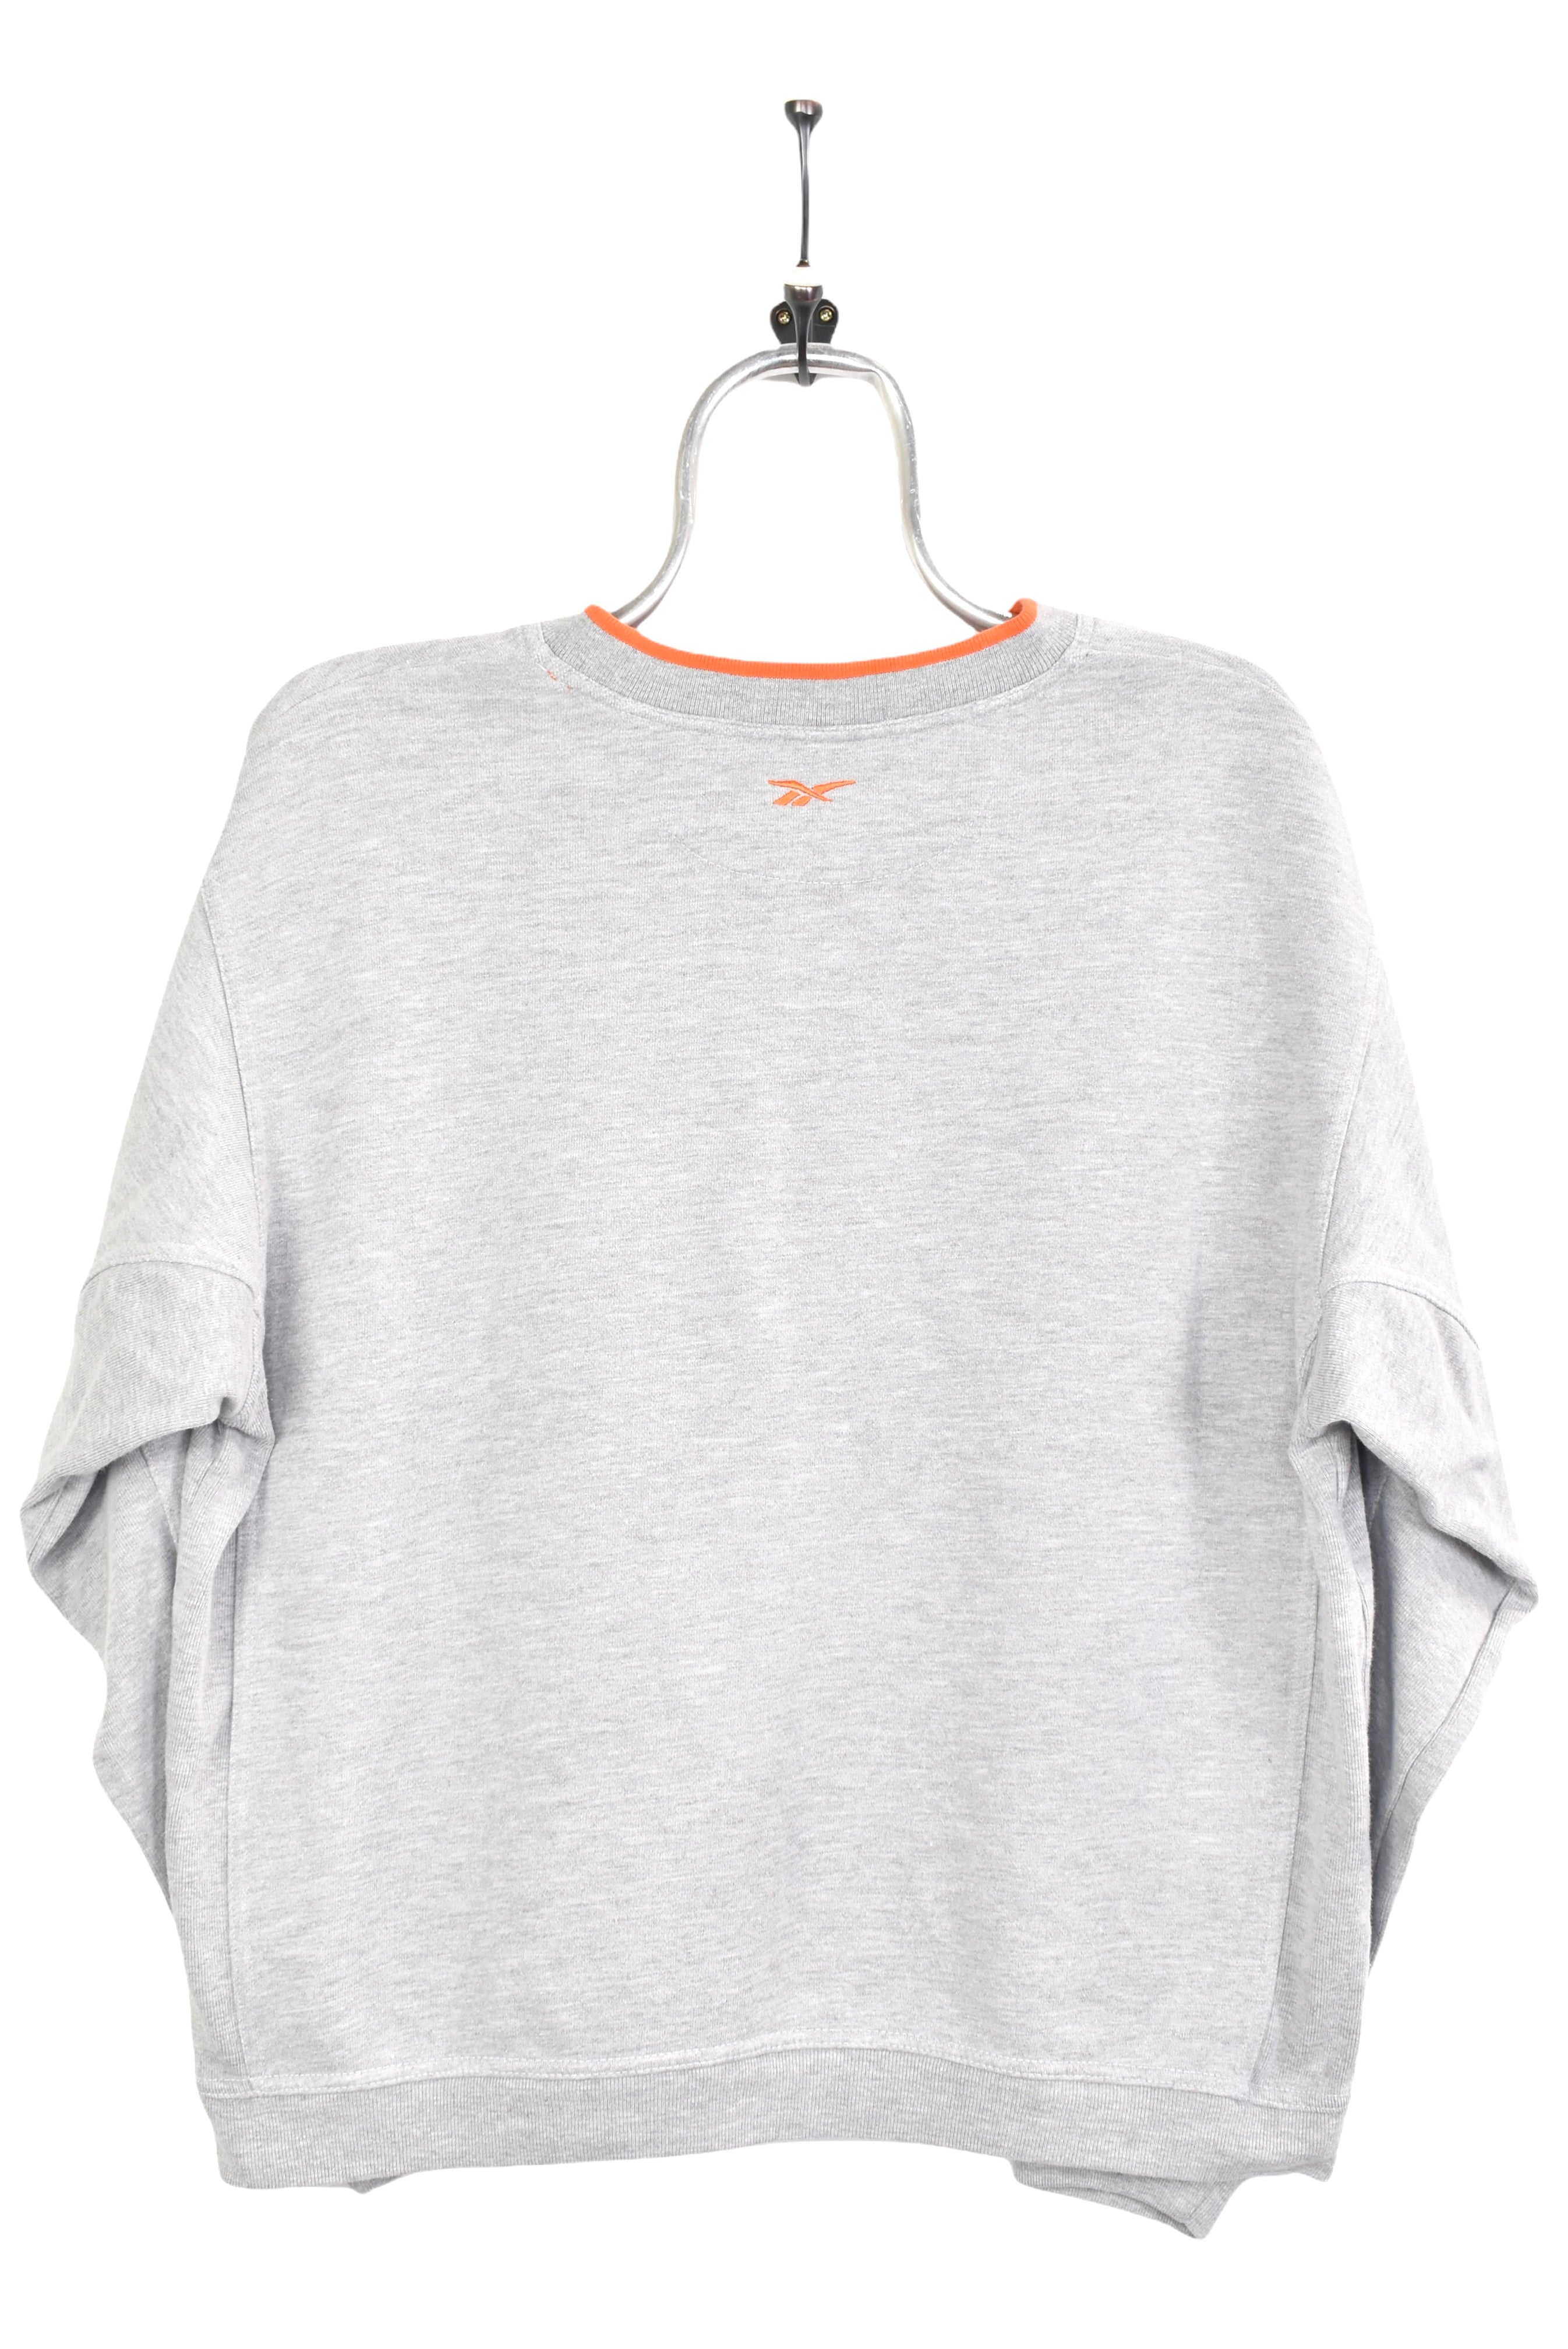 Vintage women's Reebok embroidered grey sweatshirt | Medium REEBOK